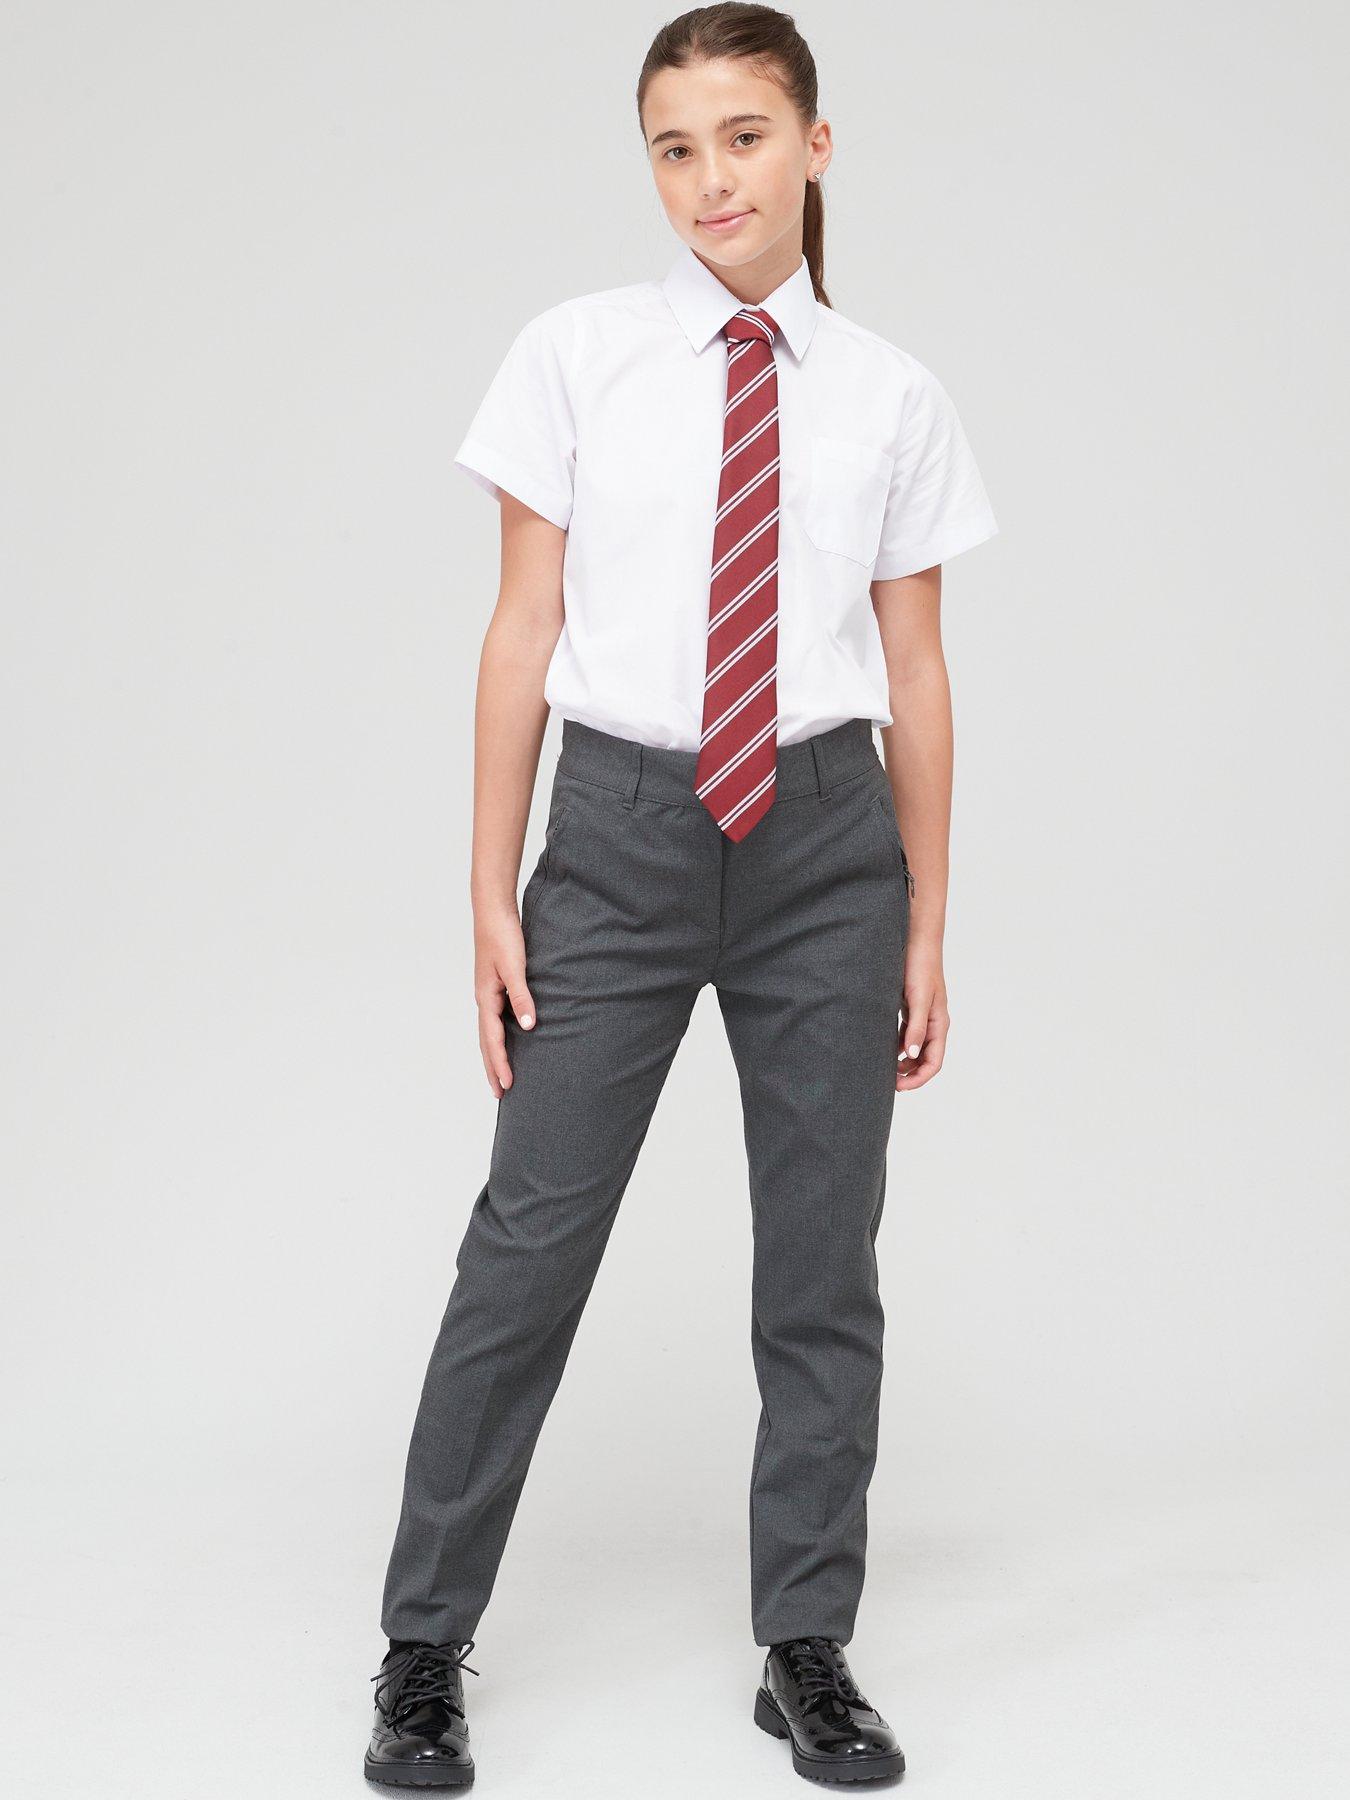 Easy Care Girls Regular Grey School Trousers 2 Pack